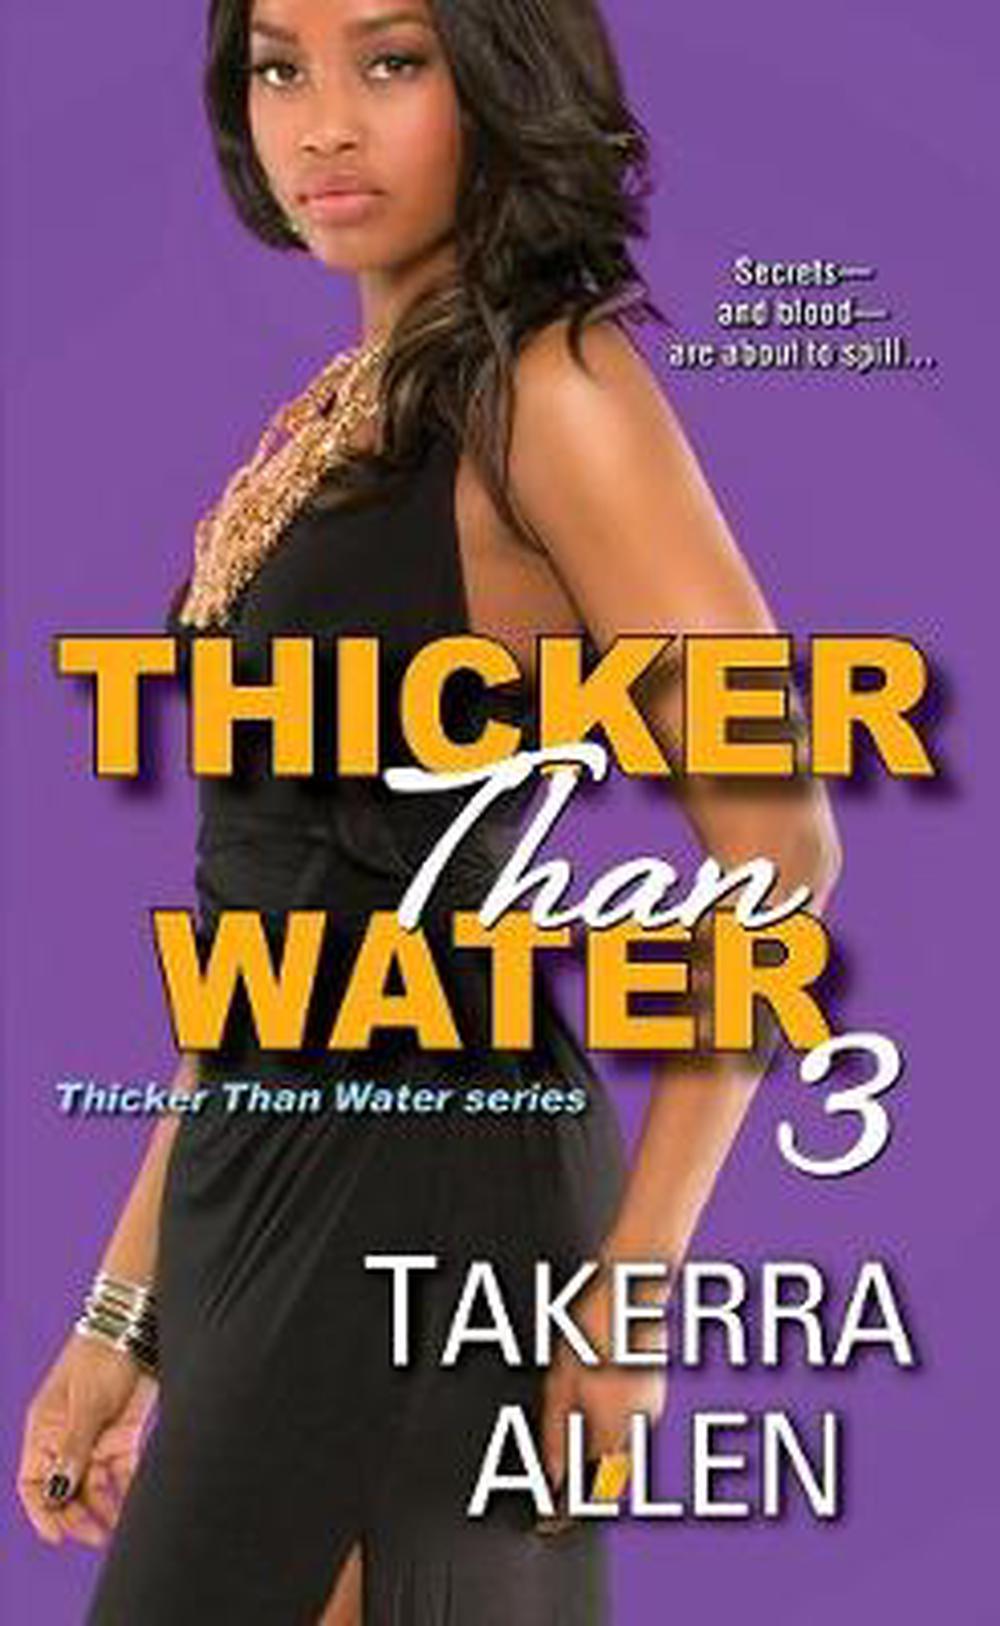 Thicker Than Water 3 by Takerra Allen, Mass Market Paperback